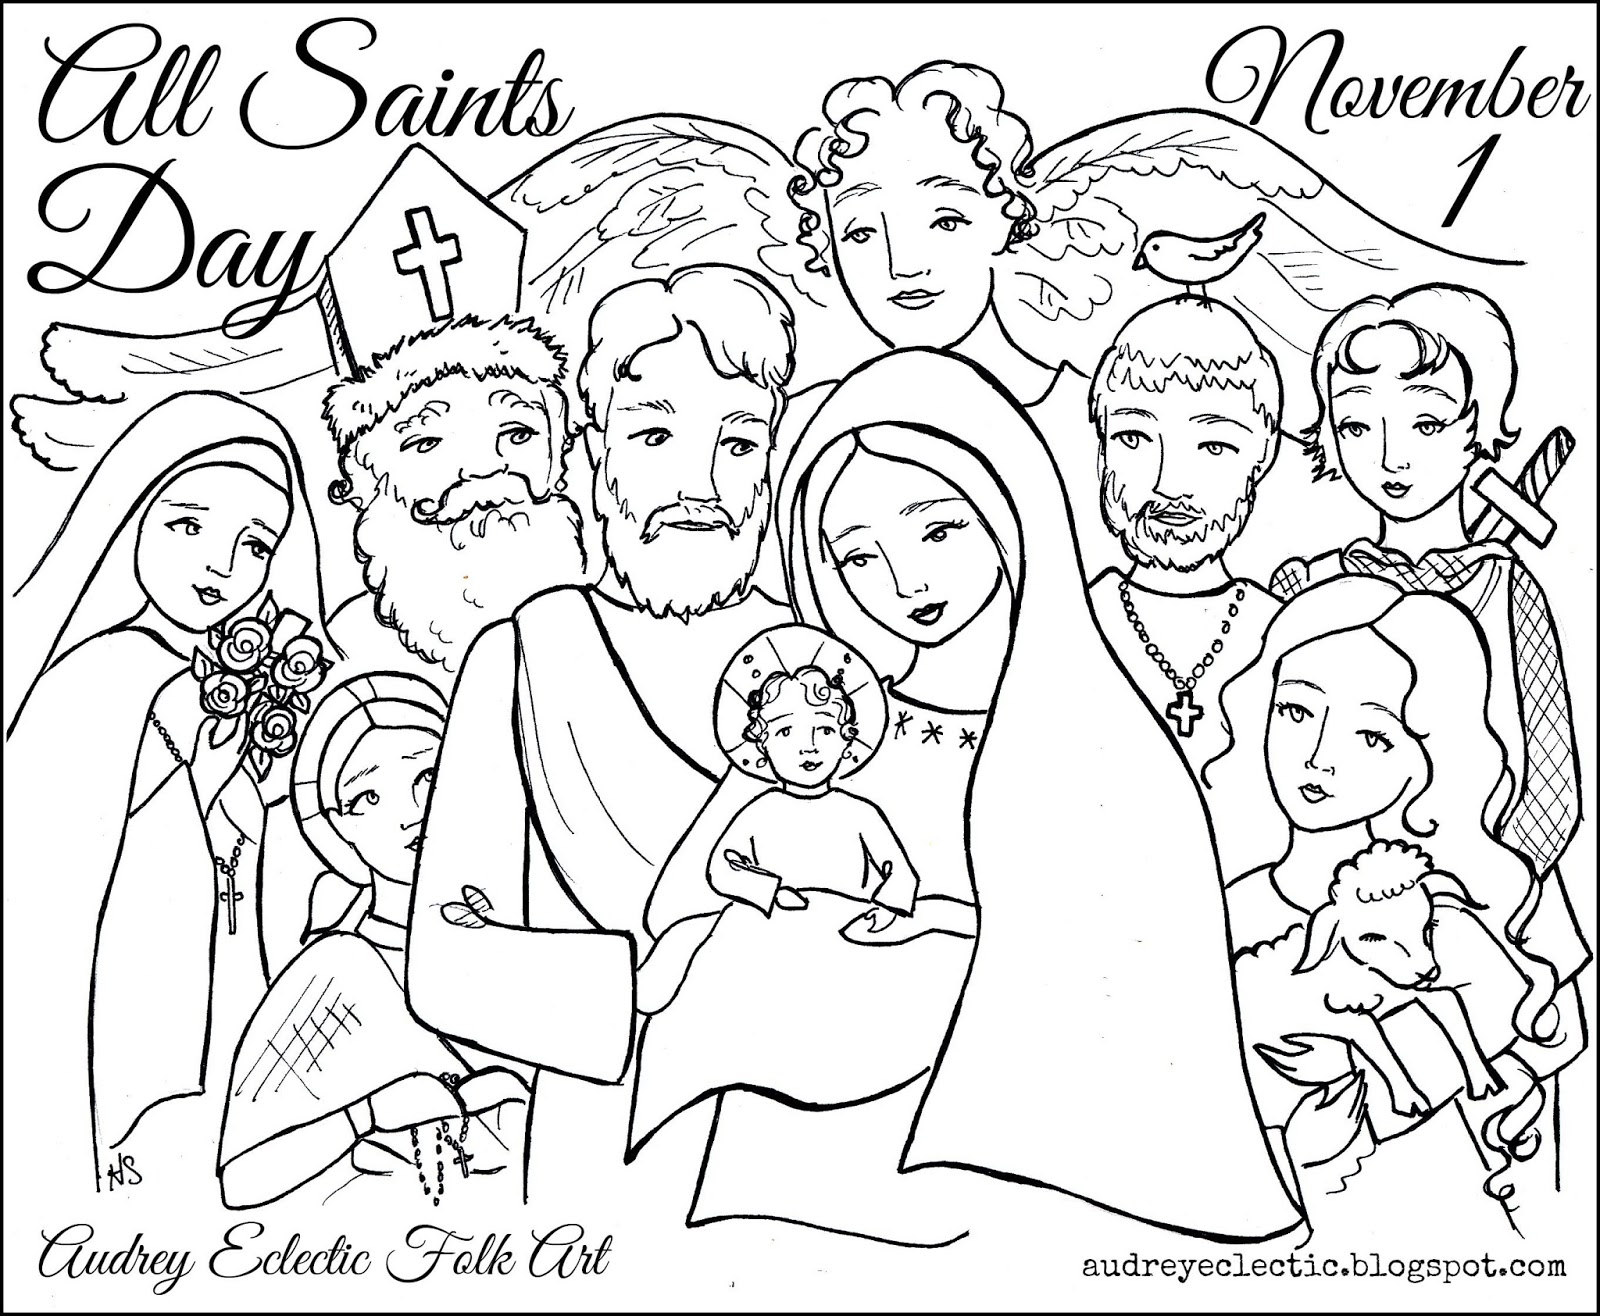 All Saints Day Festivities! - Sleightholm Folk Art